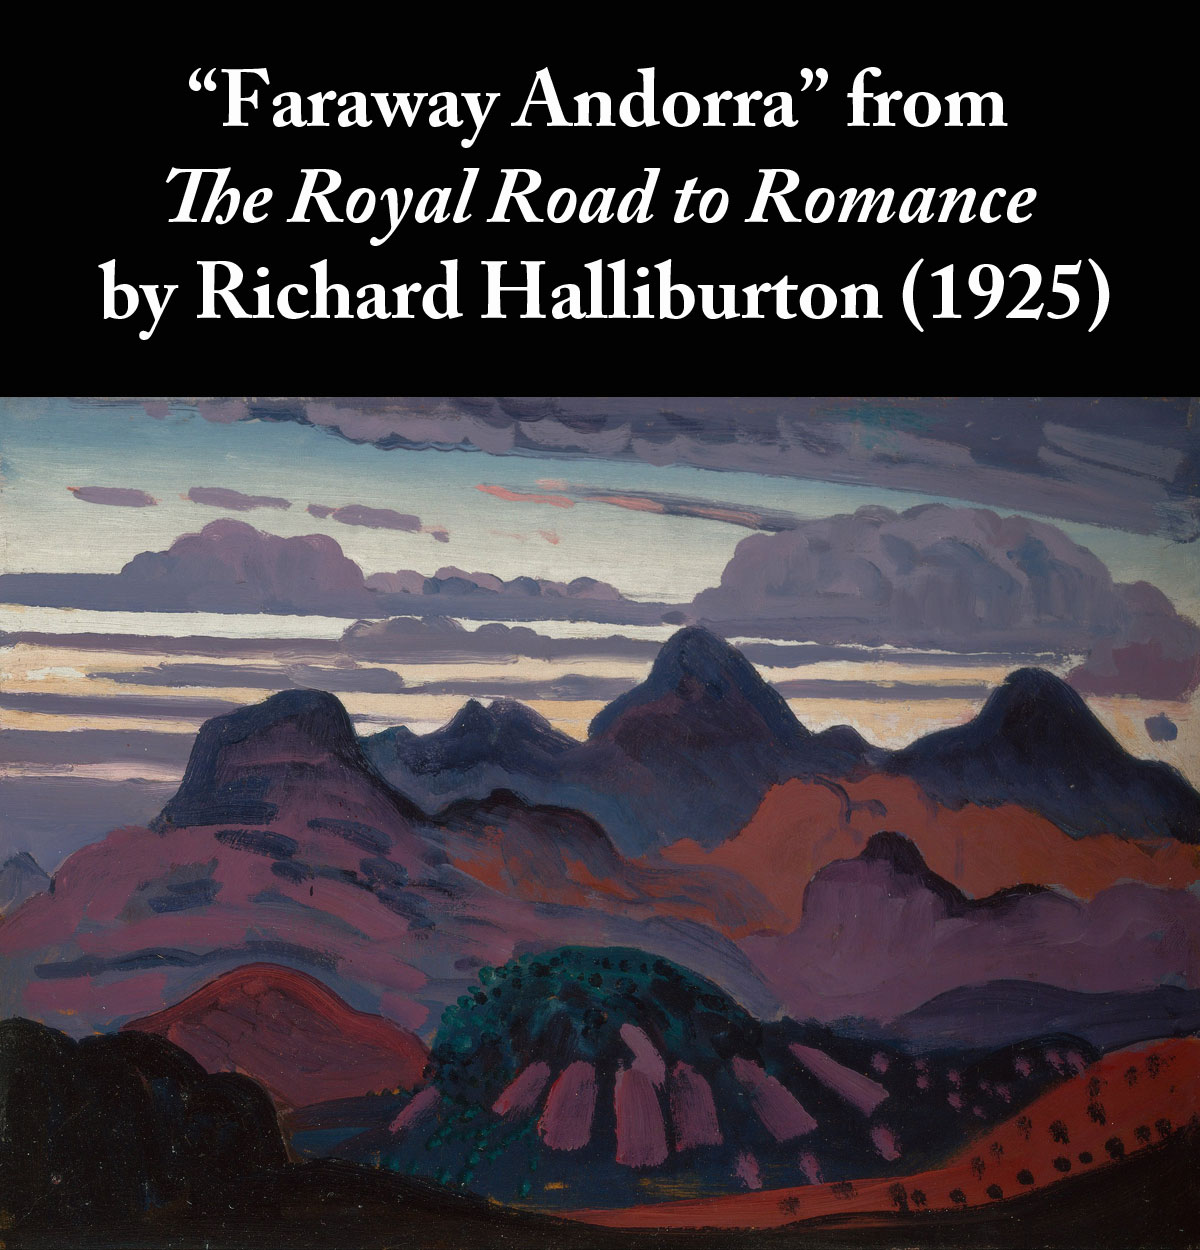 Faraway Andorra from The Royal Road to Romance by Richard Halliburton (1925)